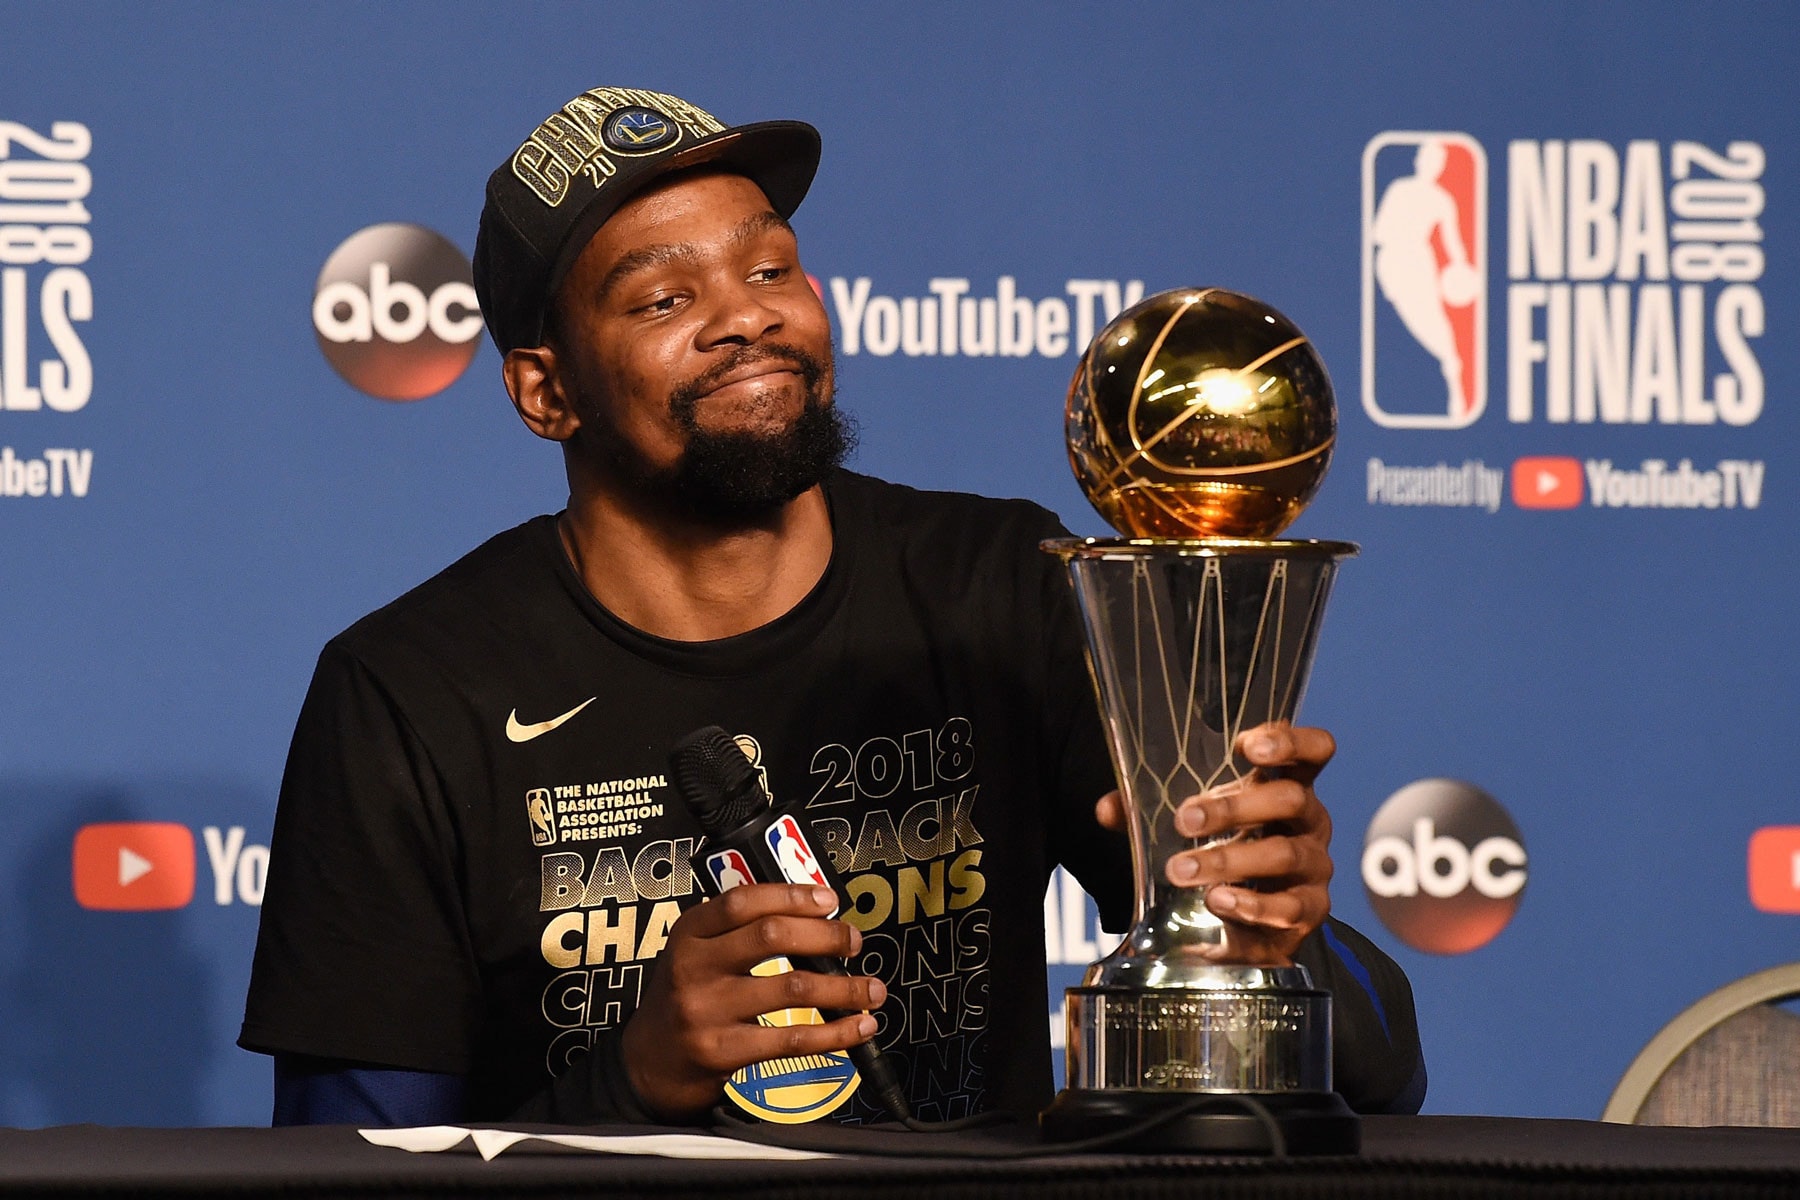 Kevin Durant 回應他被指破壞 NBA 競爭平衡的評論